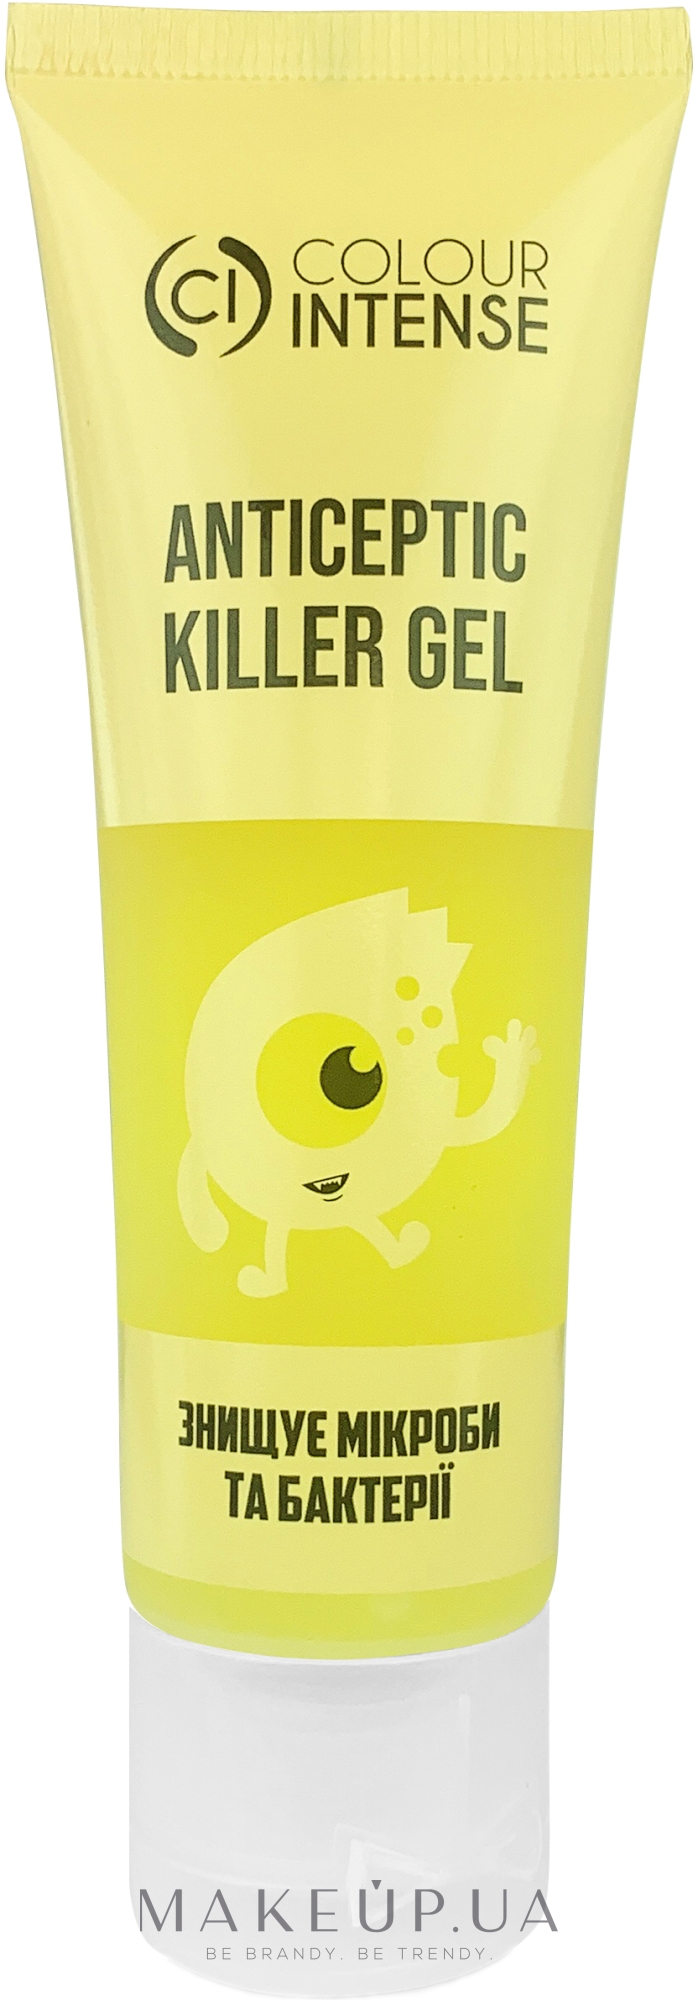 Антисептический гель для рук "Цитрус"(60% спирта) - Colour Intense Antiseptic Killer Gel Citrus — фото 50ml